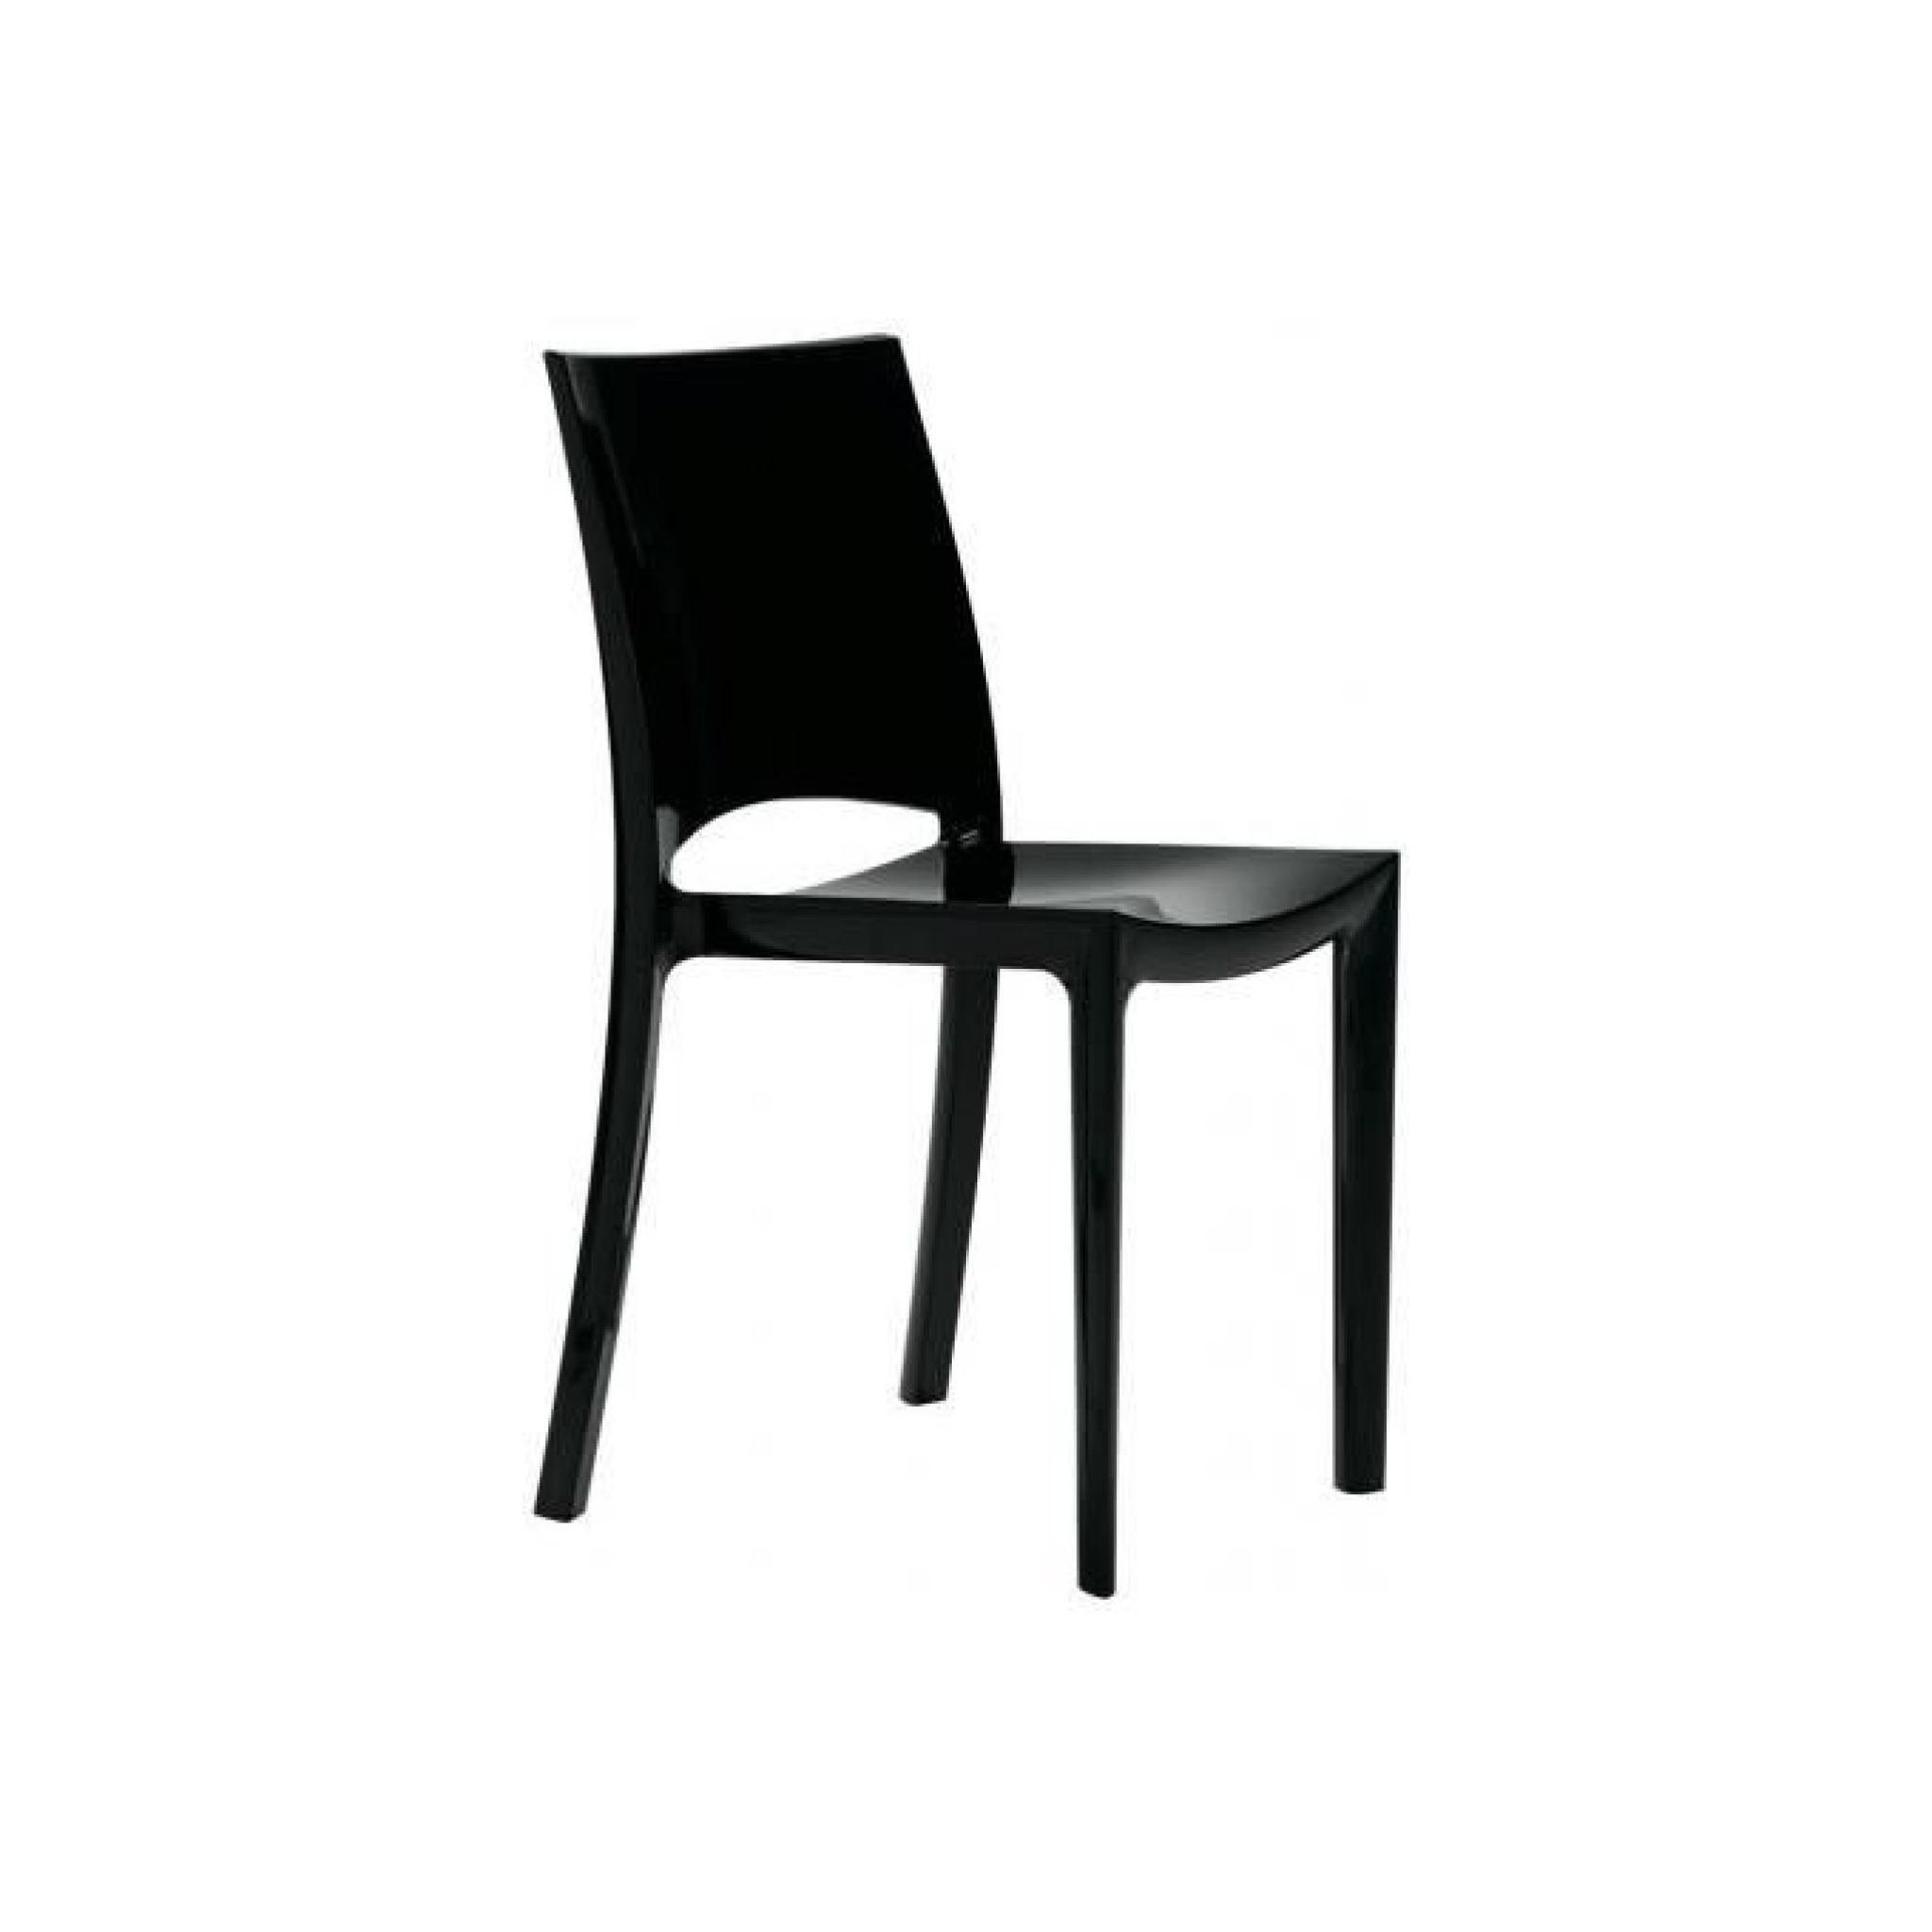 Chaise contemporaine design noire Arlequin